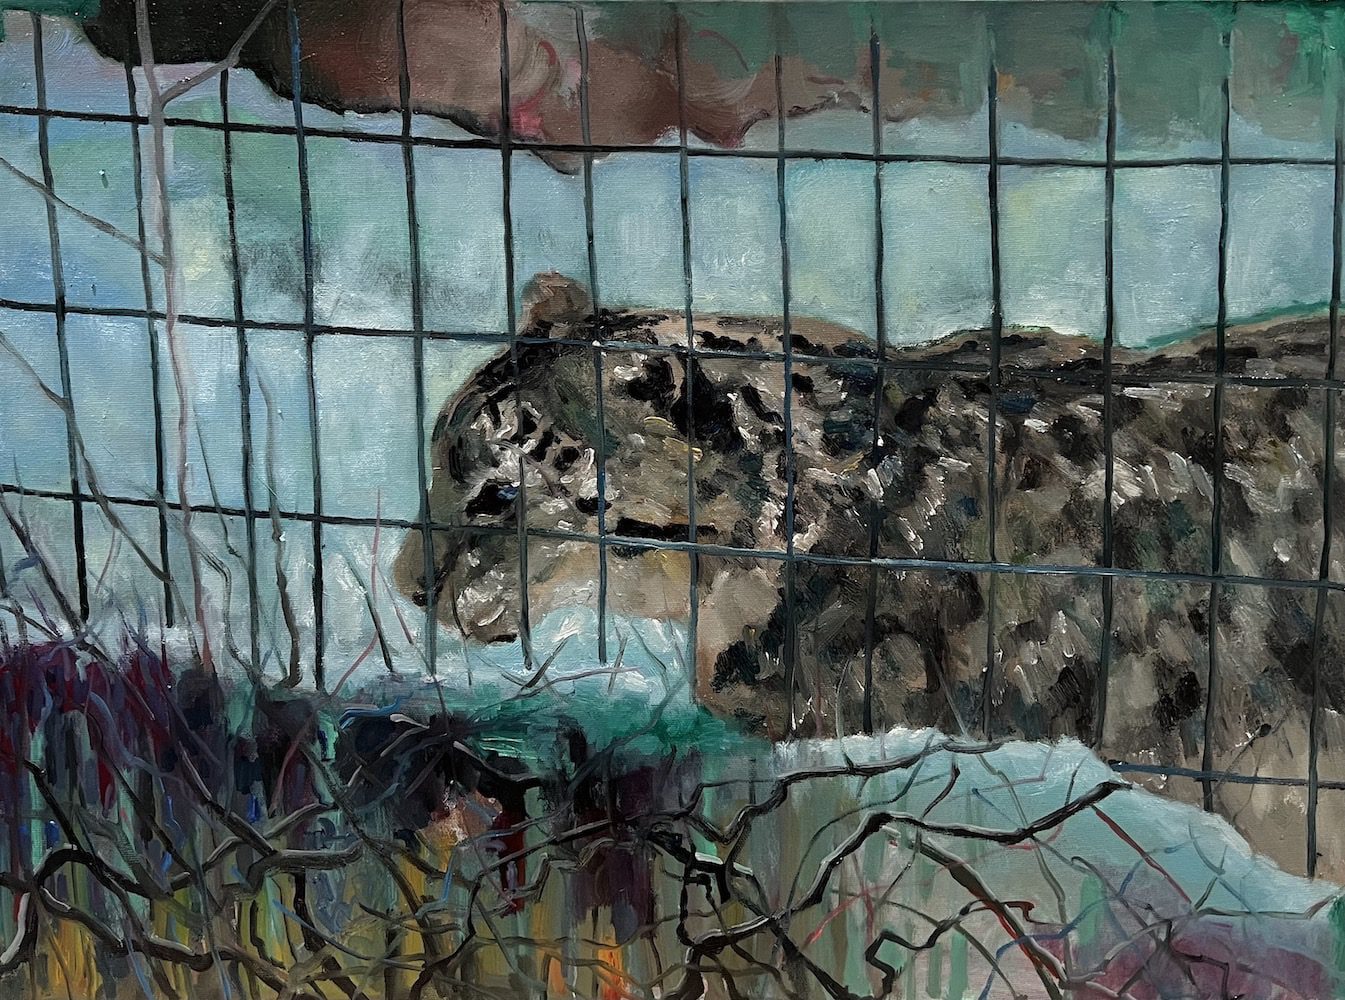 jinglu-zhao-messengers-snow-leopard-environmentalist-art-symbolism-painting-online-gallery